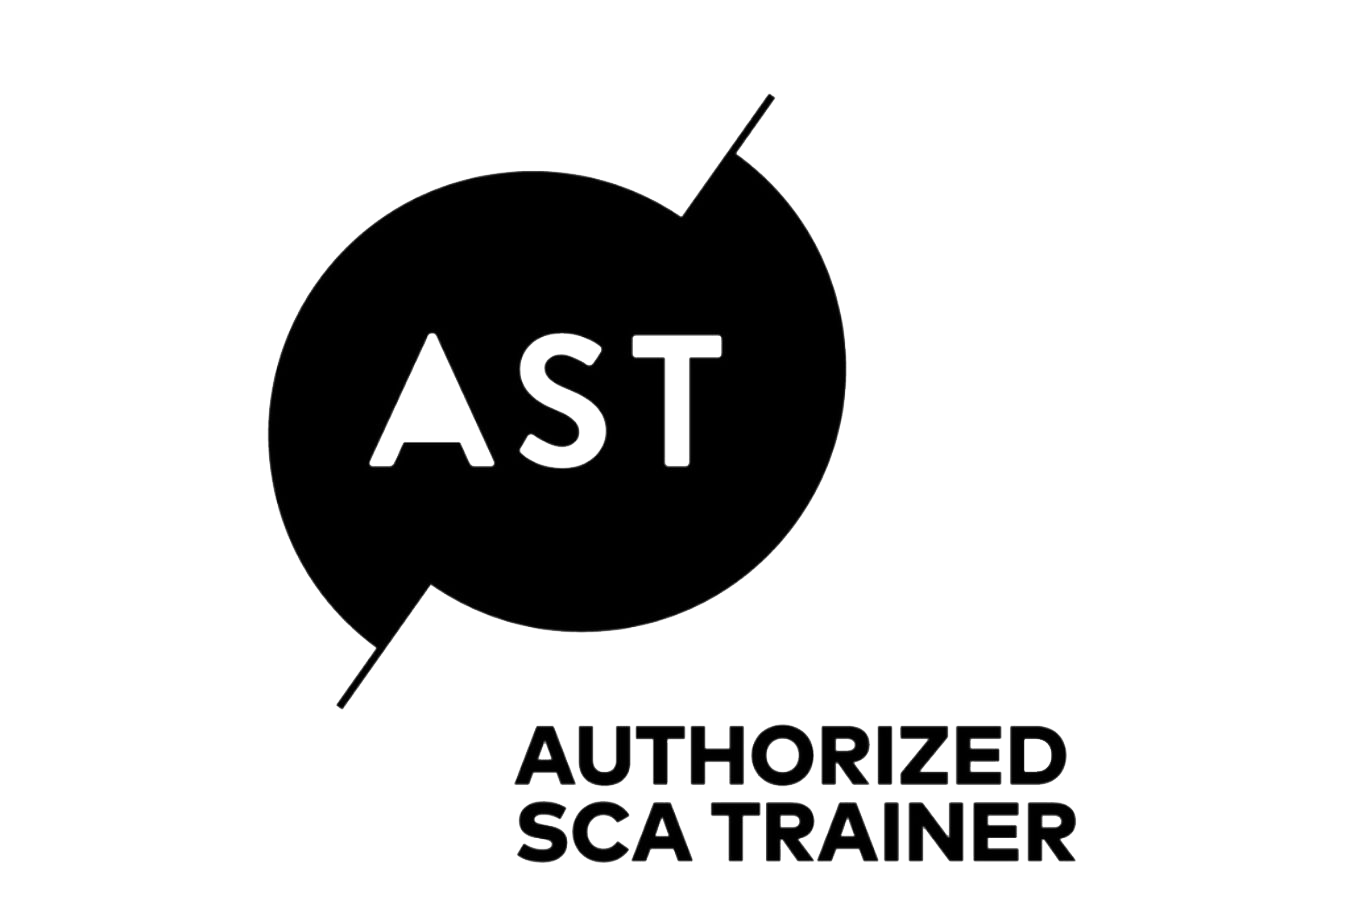 Authorized SCA Trainer